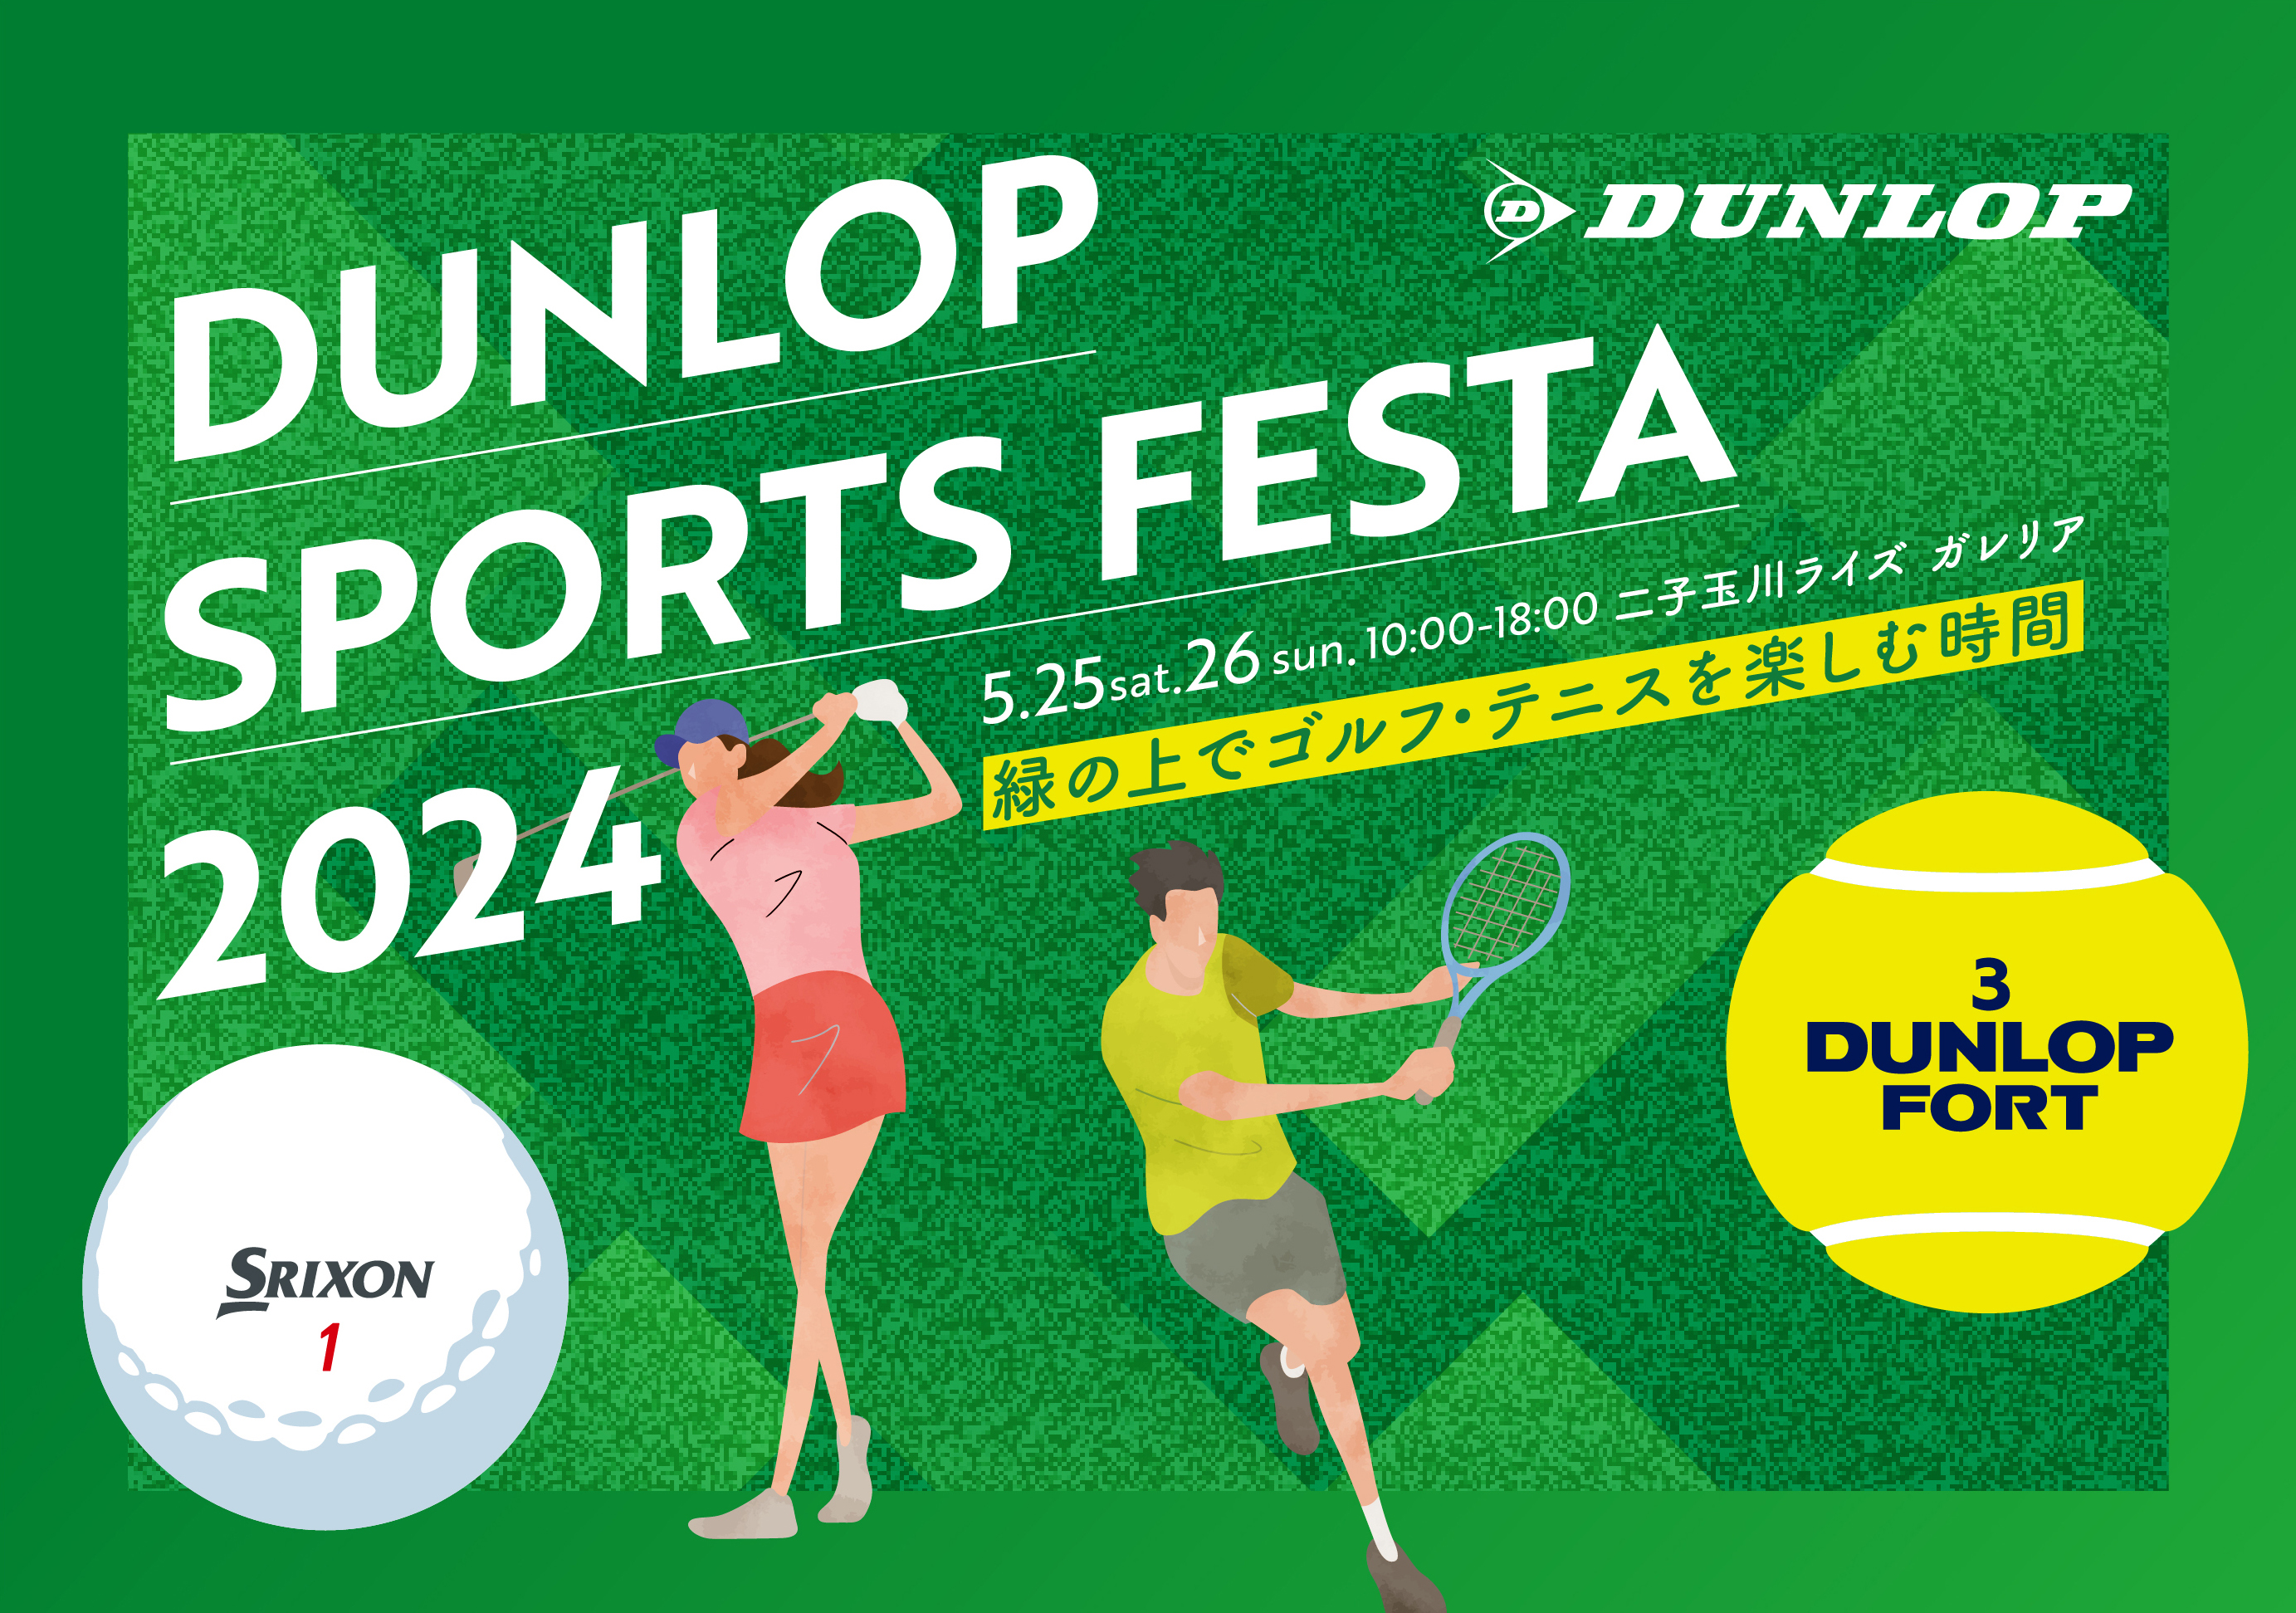 「DUNLOP SPORTS FESTA～緑の上でゴルフ・テニスを楽しむ時間～」を二子玉川で開催